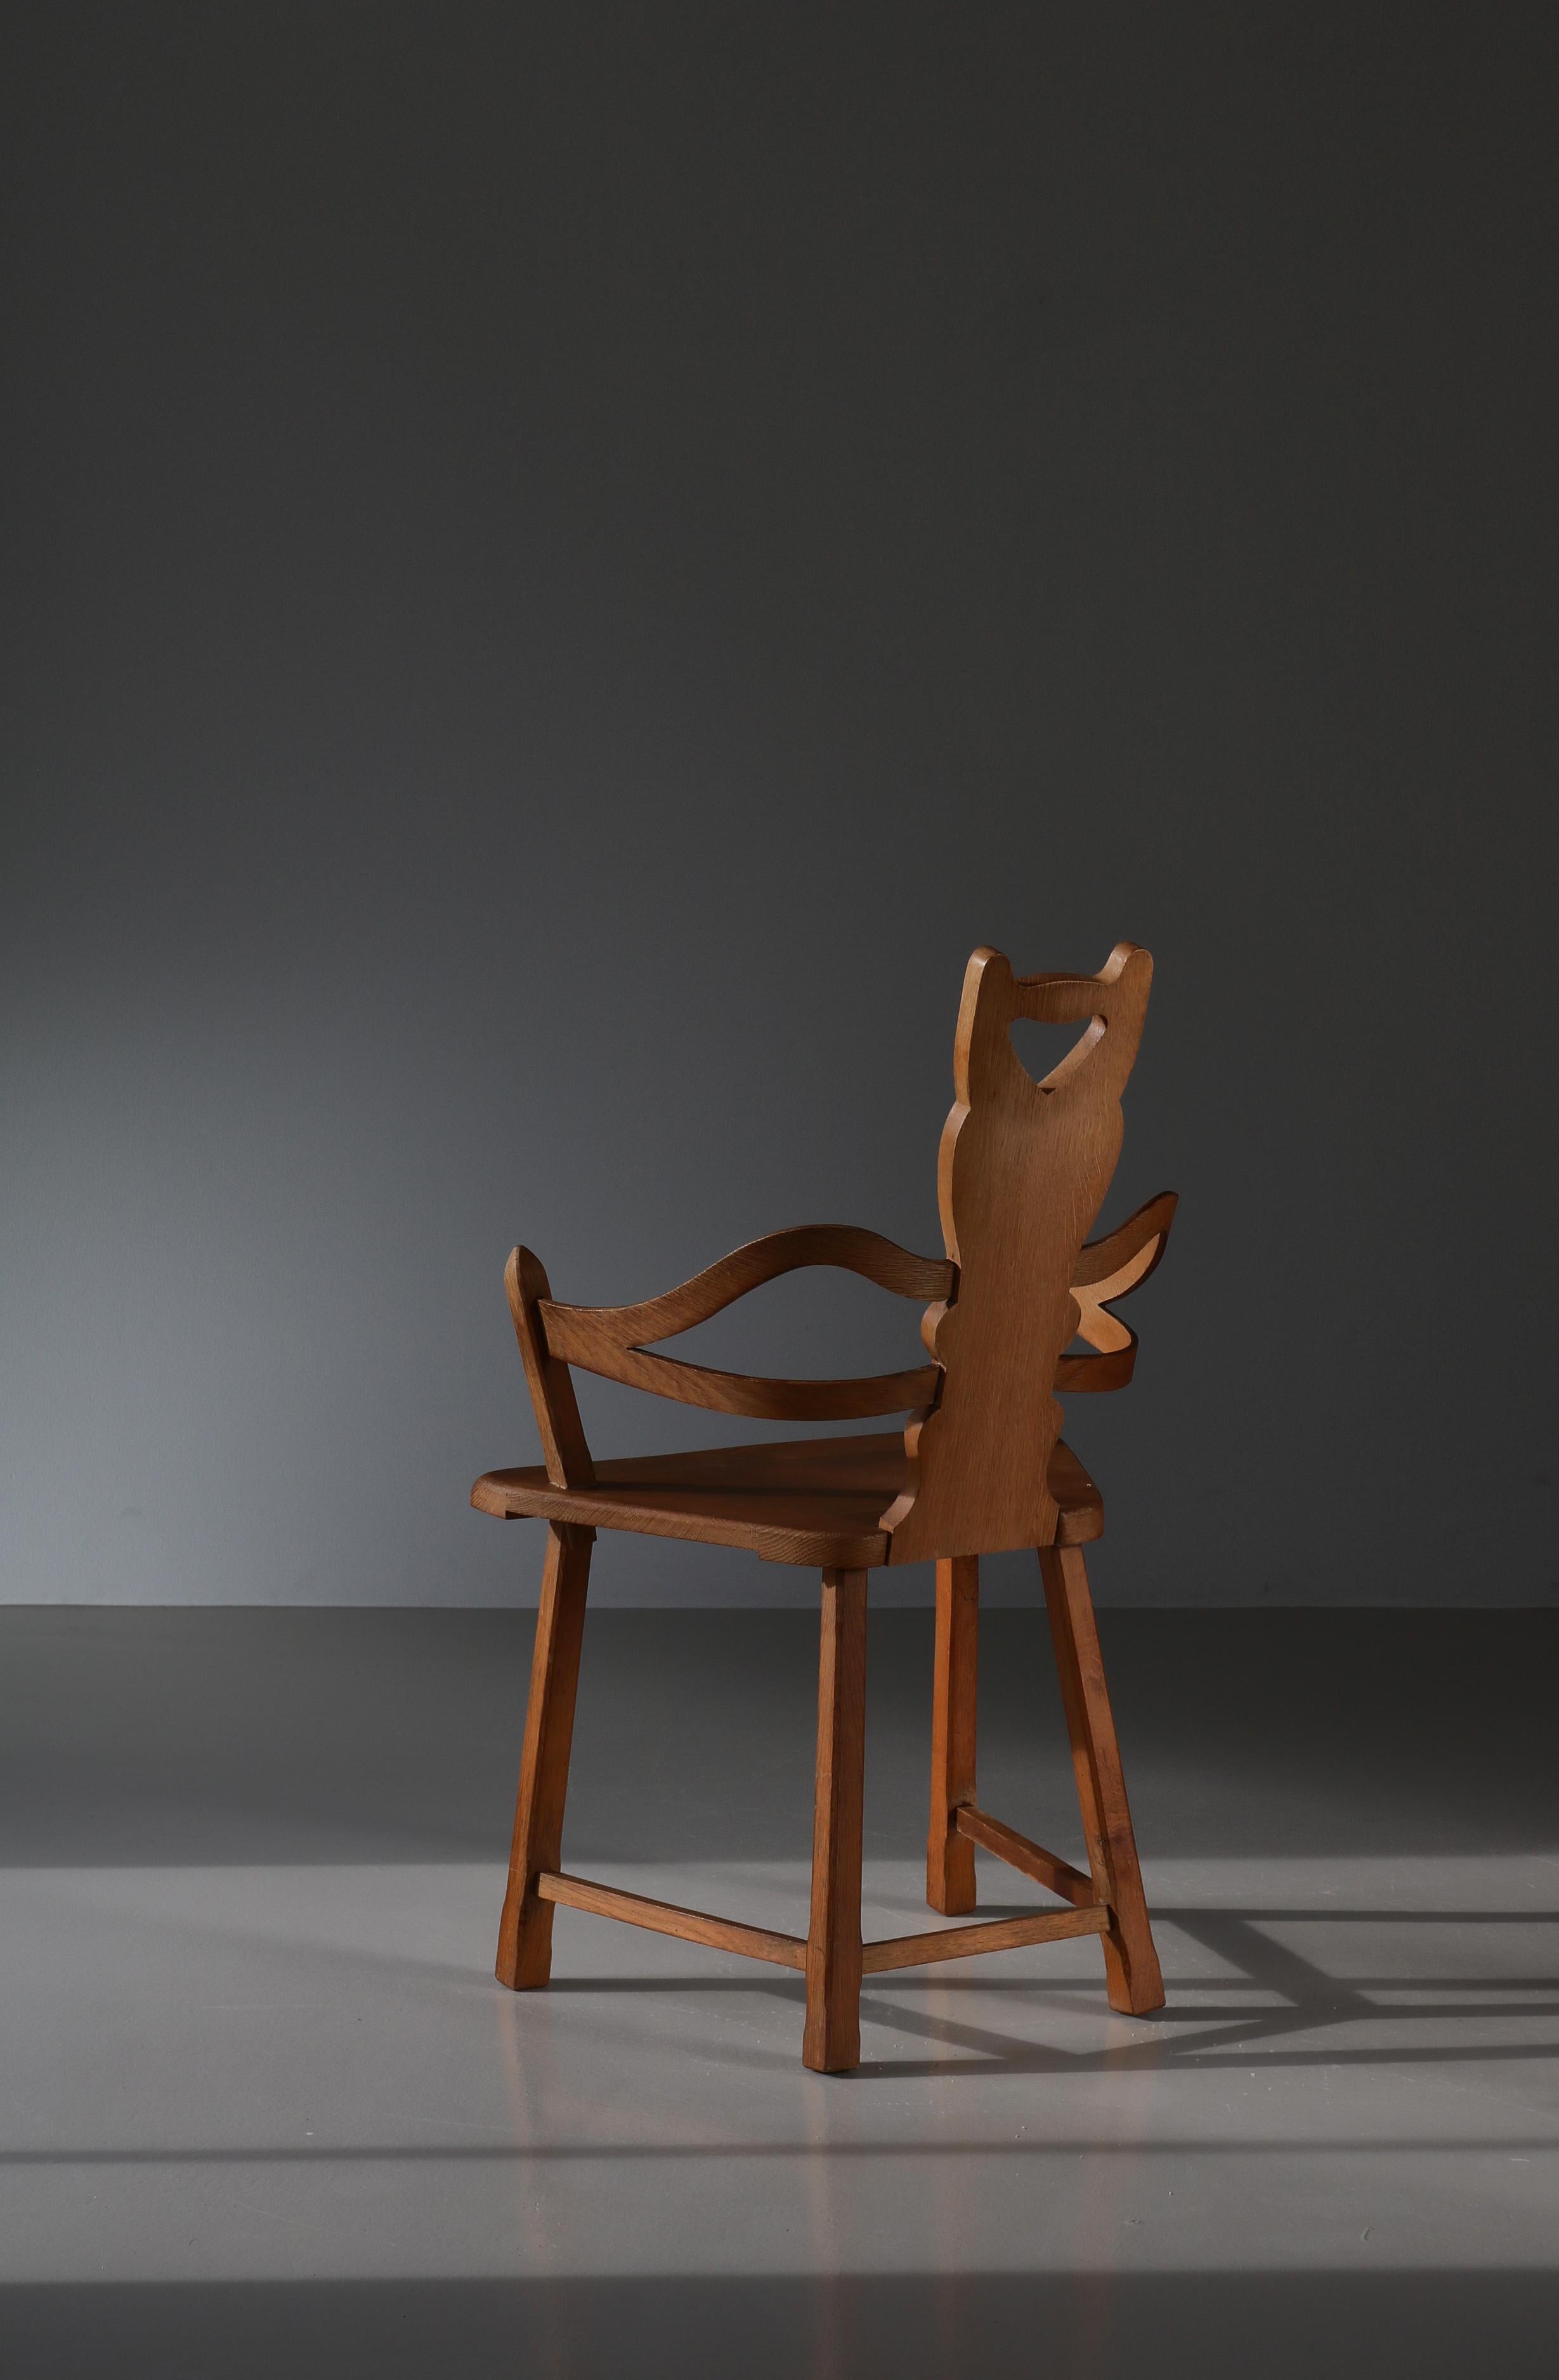 Swedish Folk Art Chair Handmade in Oakwood, 1900s In Fair Condition For Sale In Odense, DK